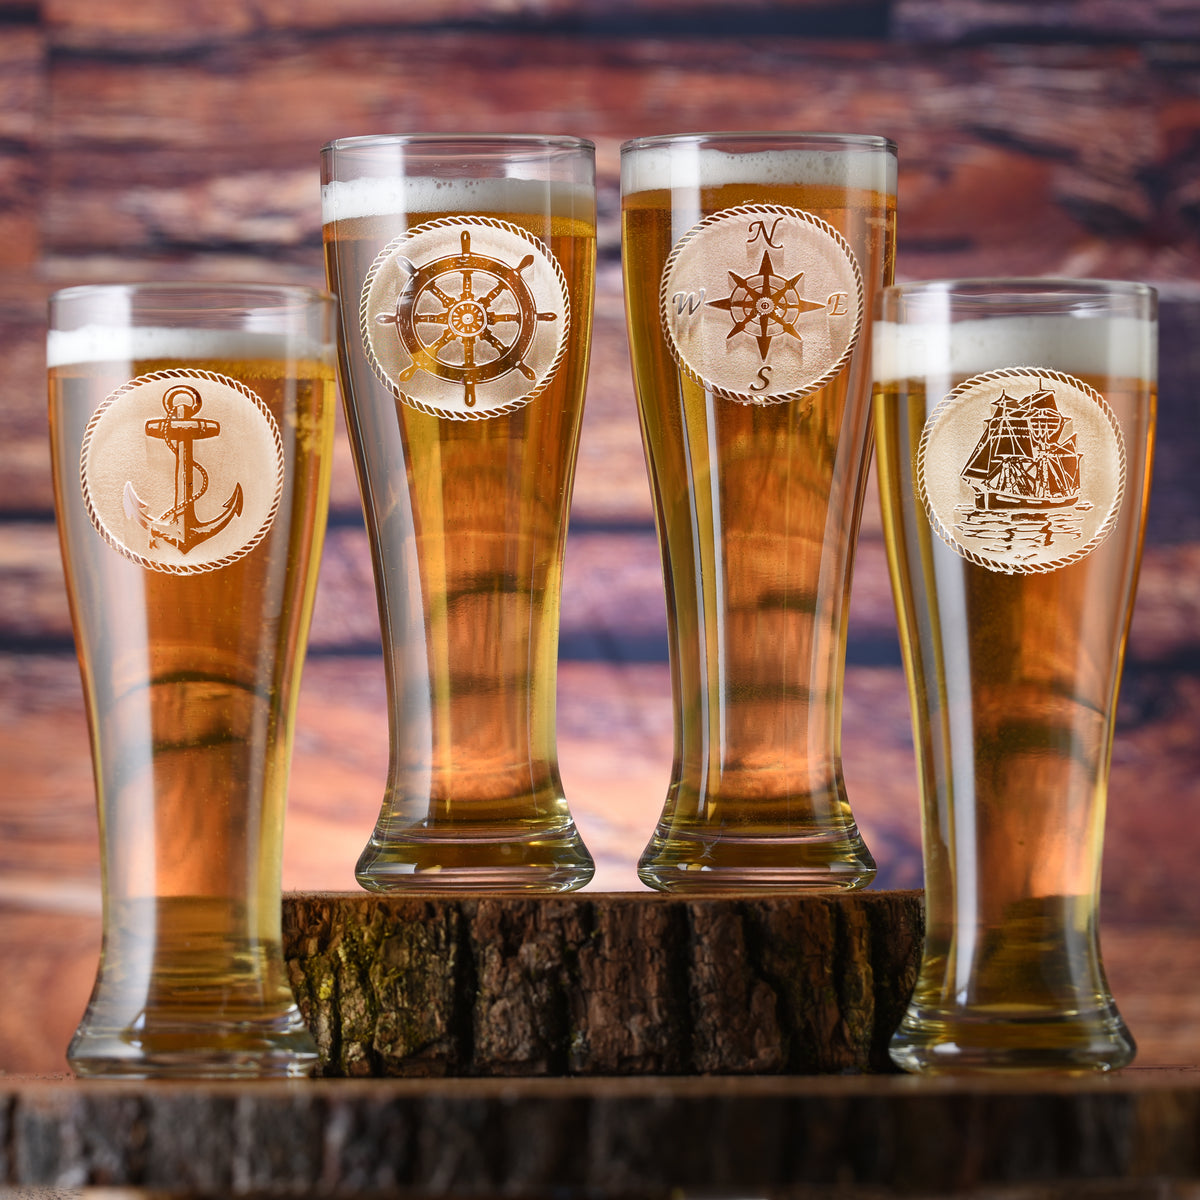 Unique Groomsmen Gifts, Engraved Best Man Pilsner Beer Glass